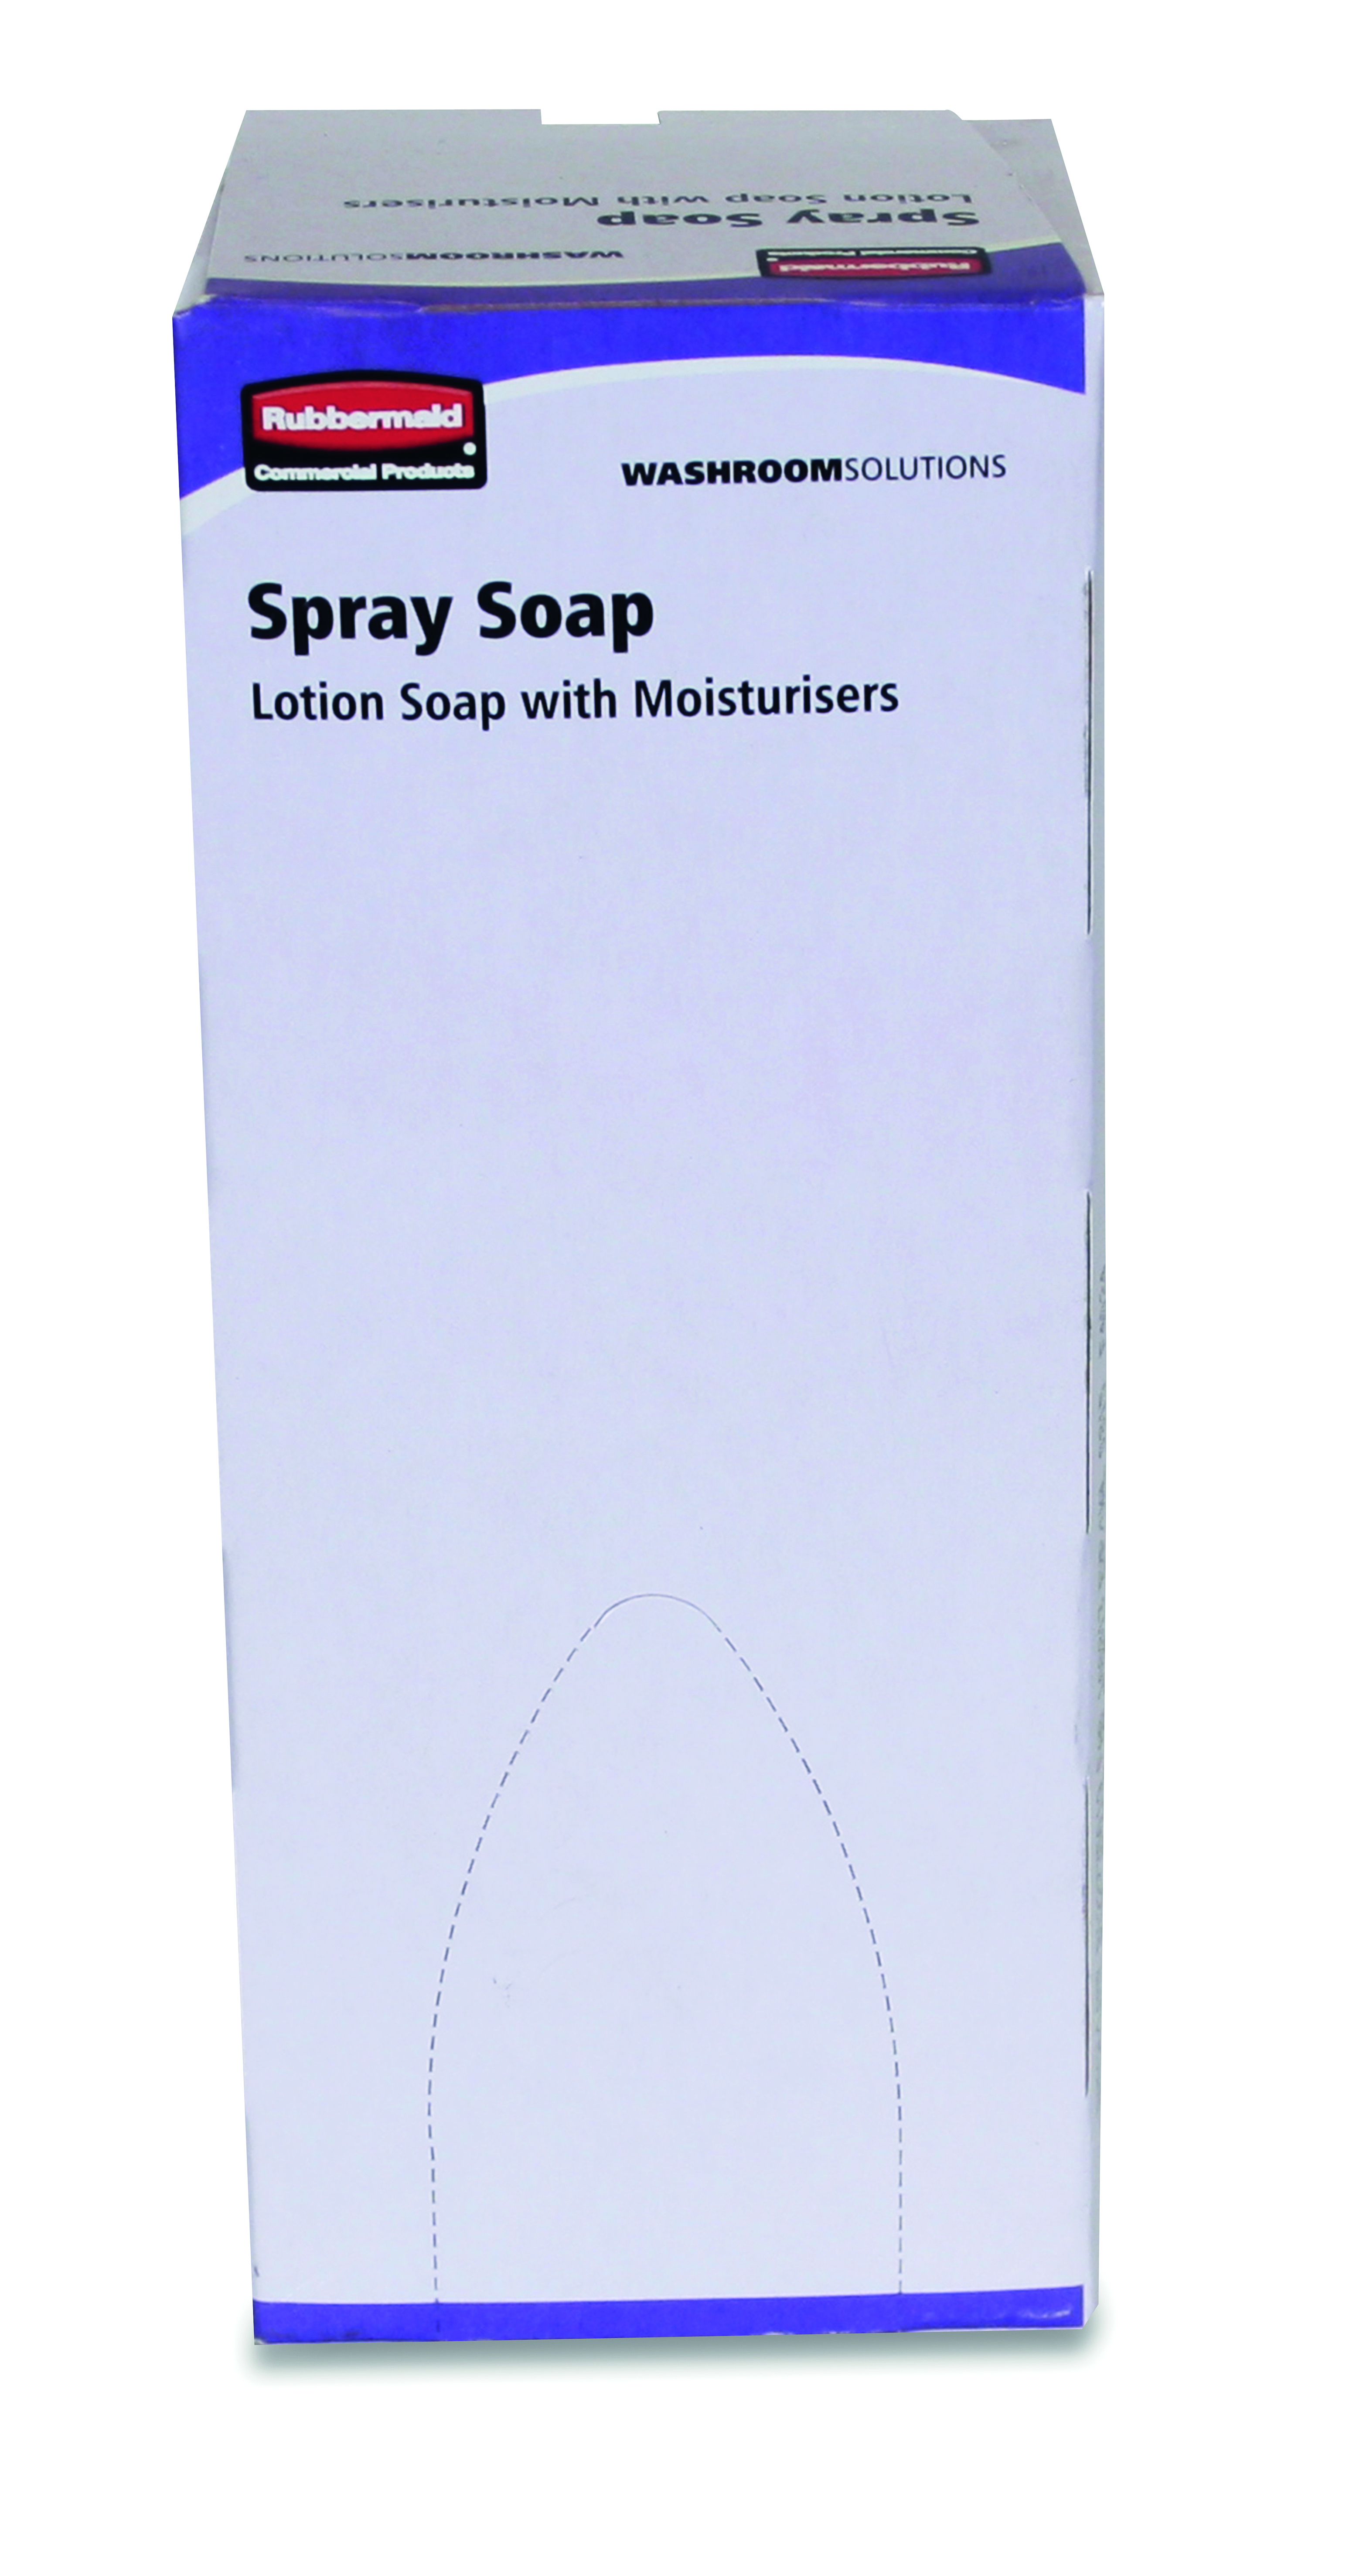 RJ - Anti-Bacterial Spray Soap 800ml